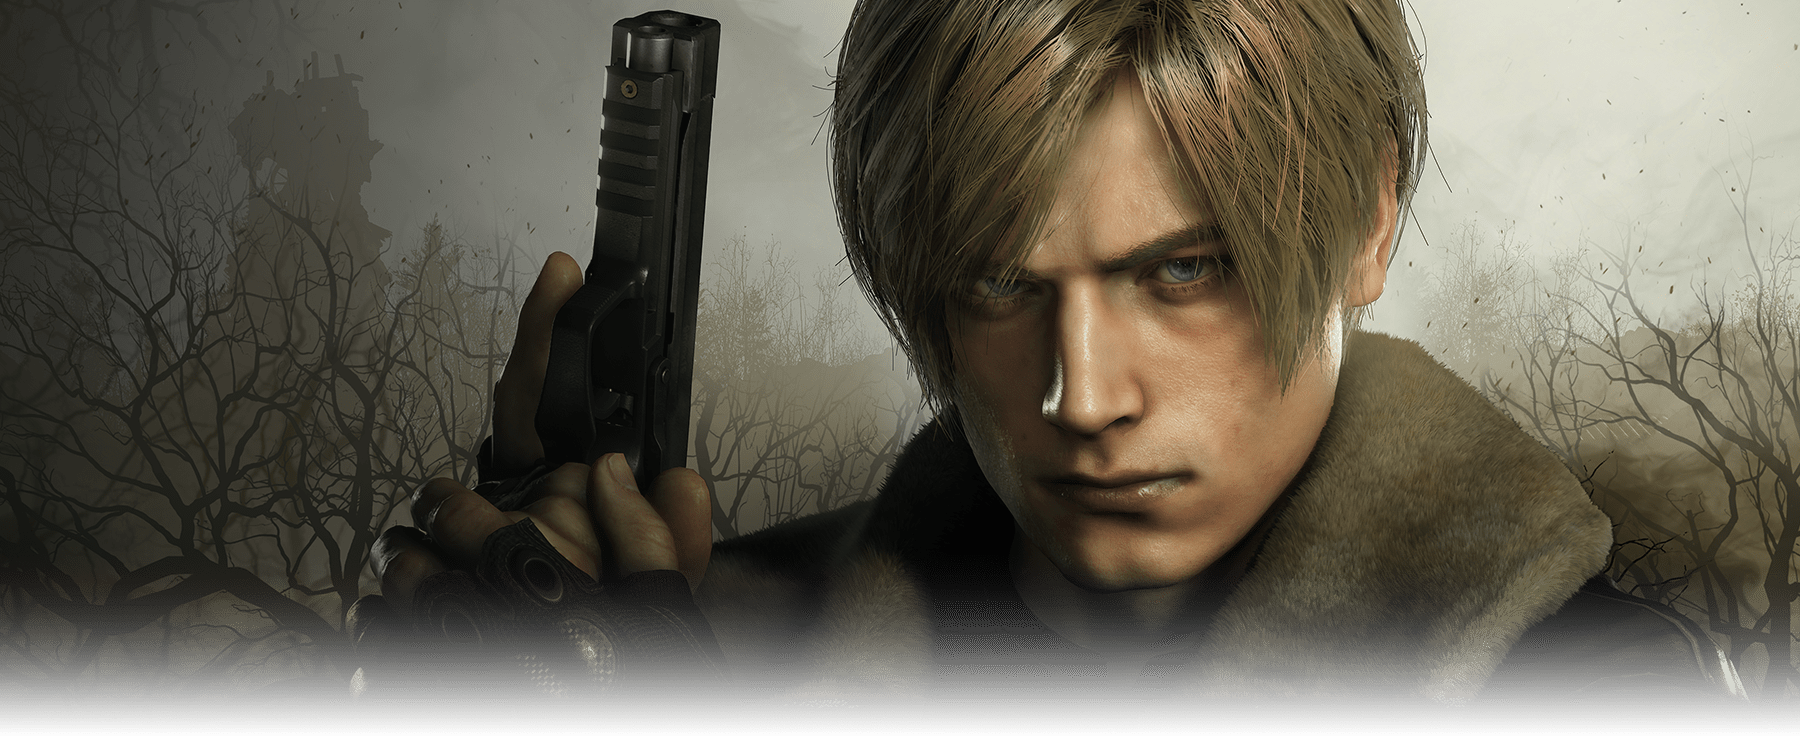 Modo RV de Resident Evil 4